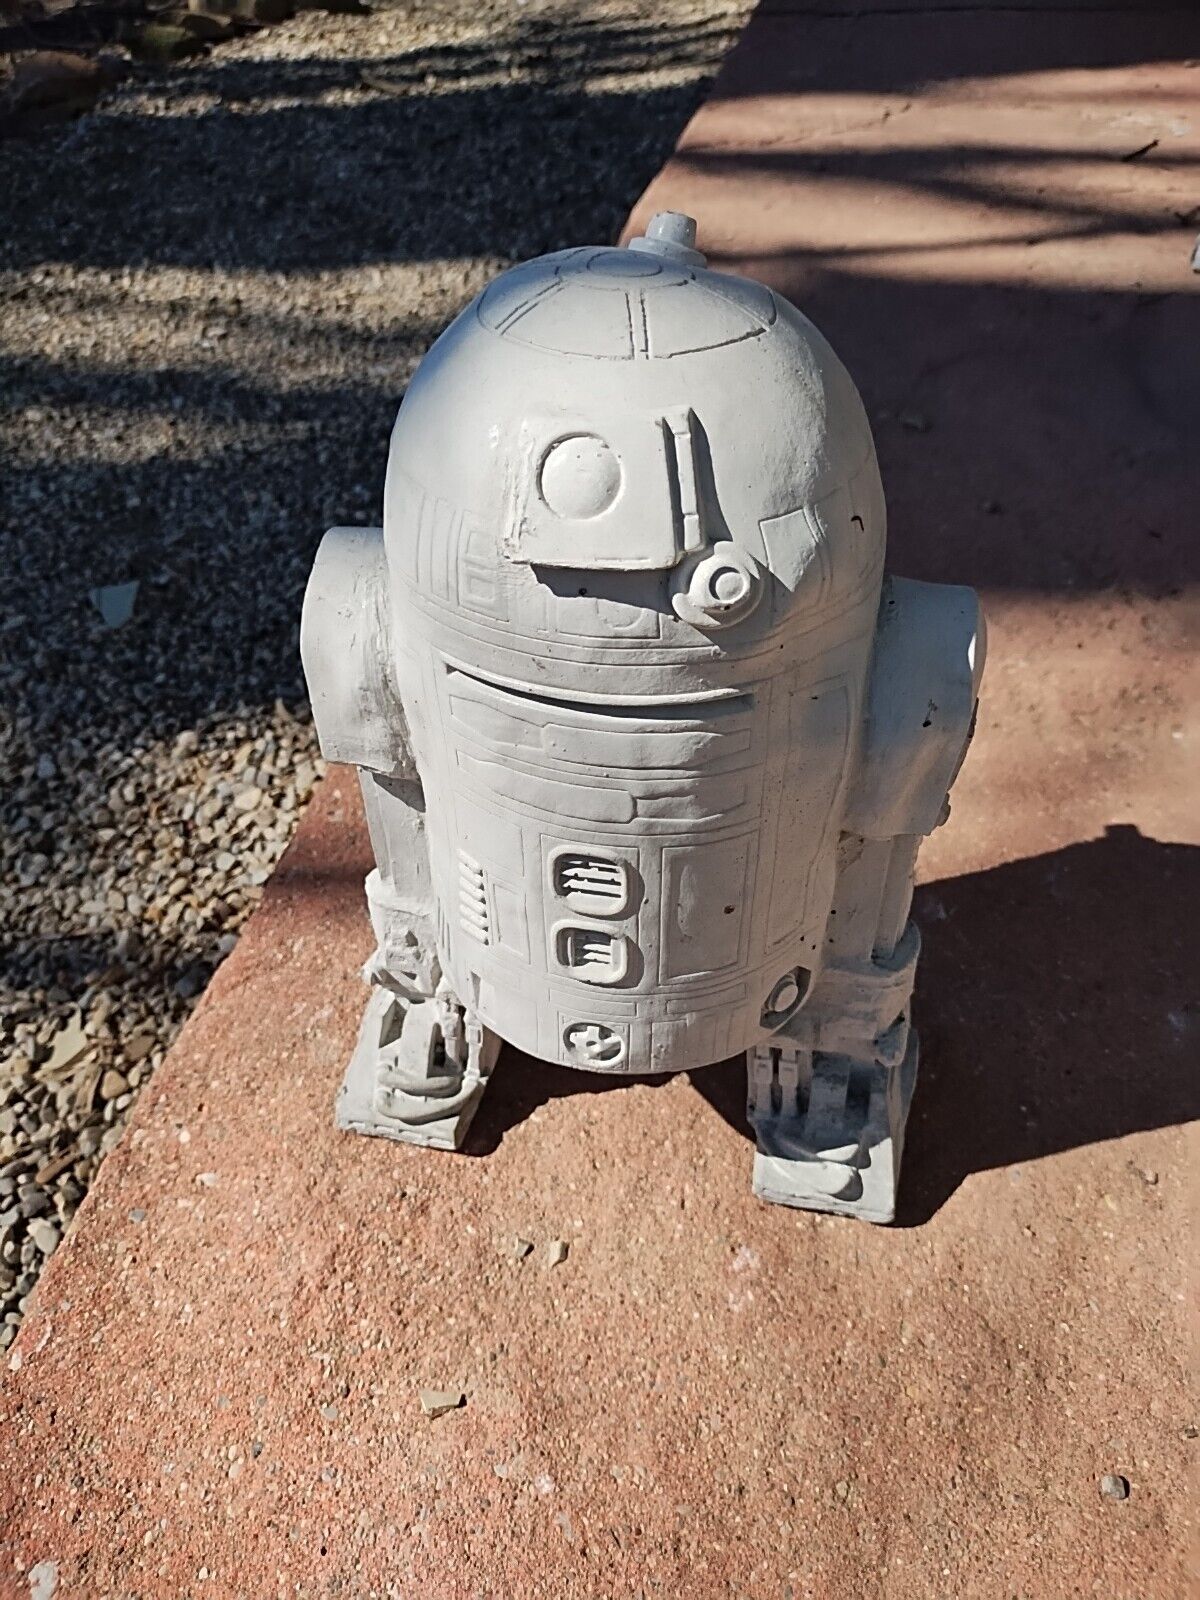 R2D2 11x8 Inches 100% Concrete Unpainted Handmade Collectors Star Wars Figures